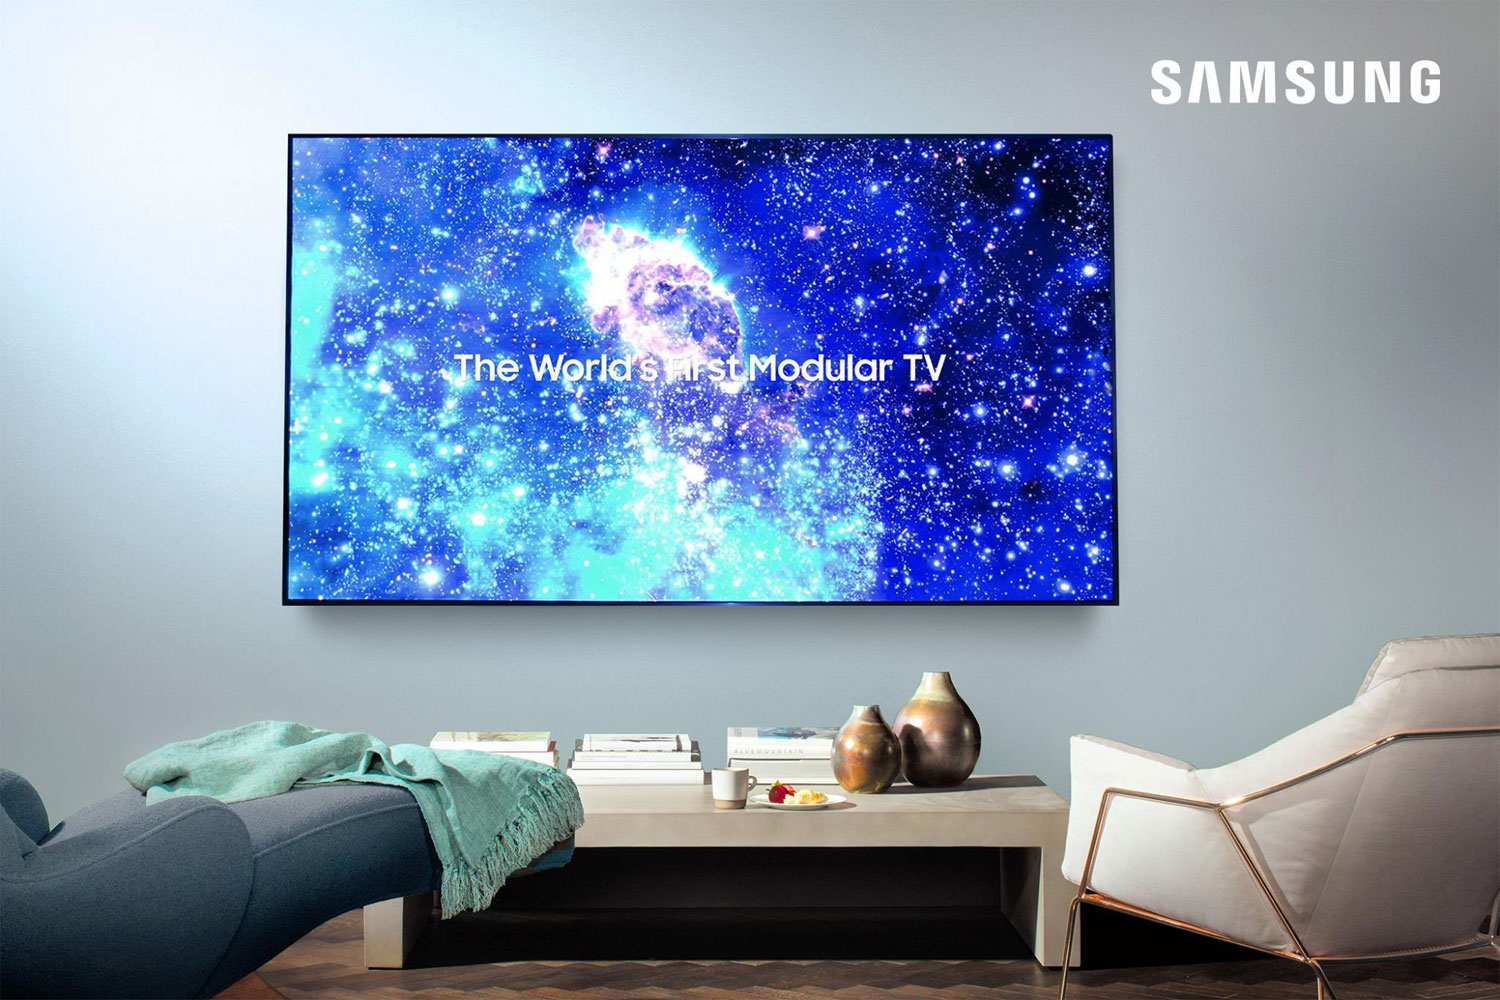 Udelade eftertænksom Sociologi Samsung to launch 75" microLED TV next year - rumor - FlatpanelsHD